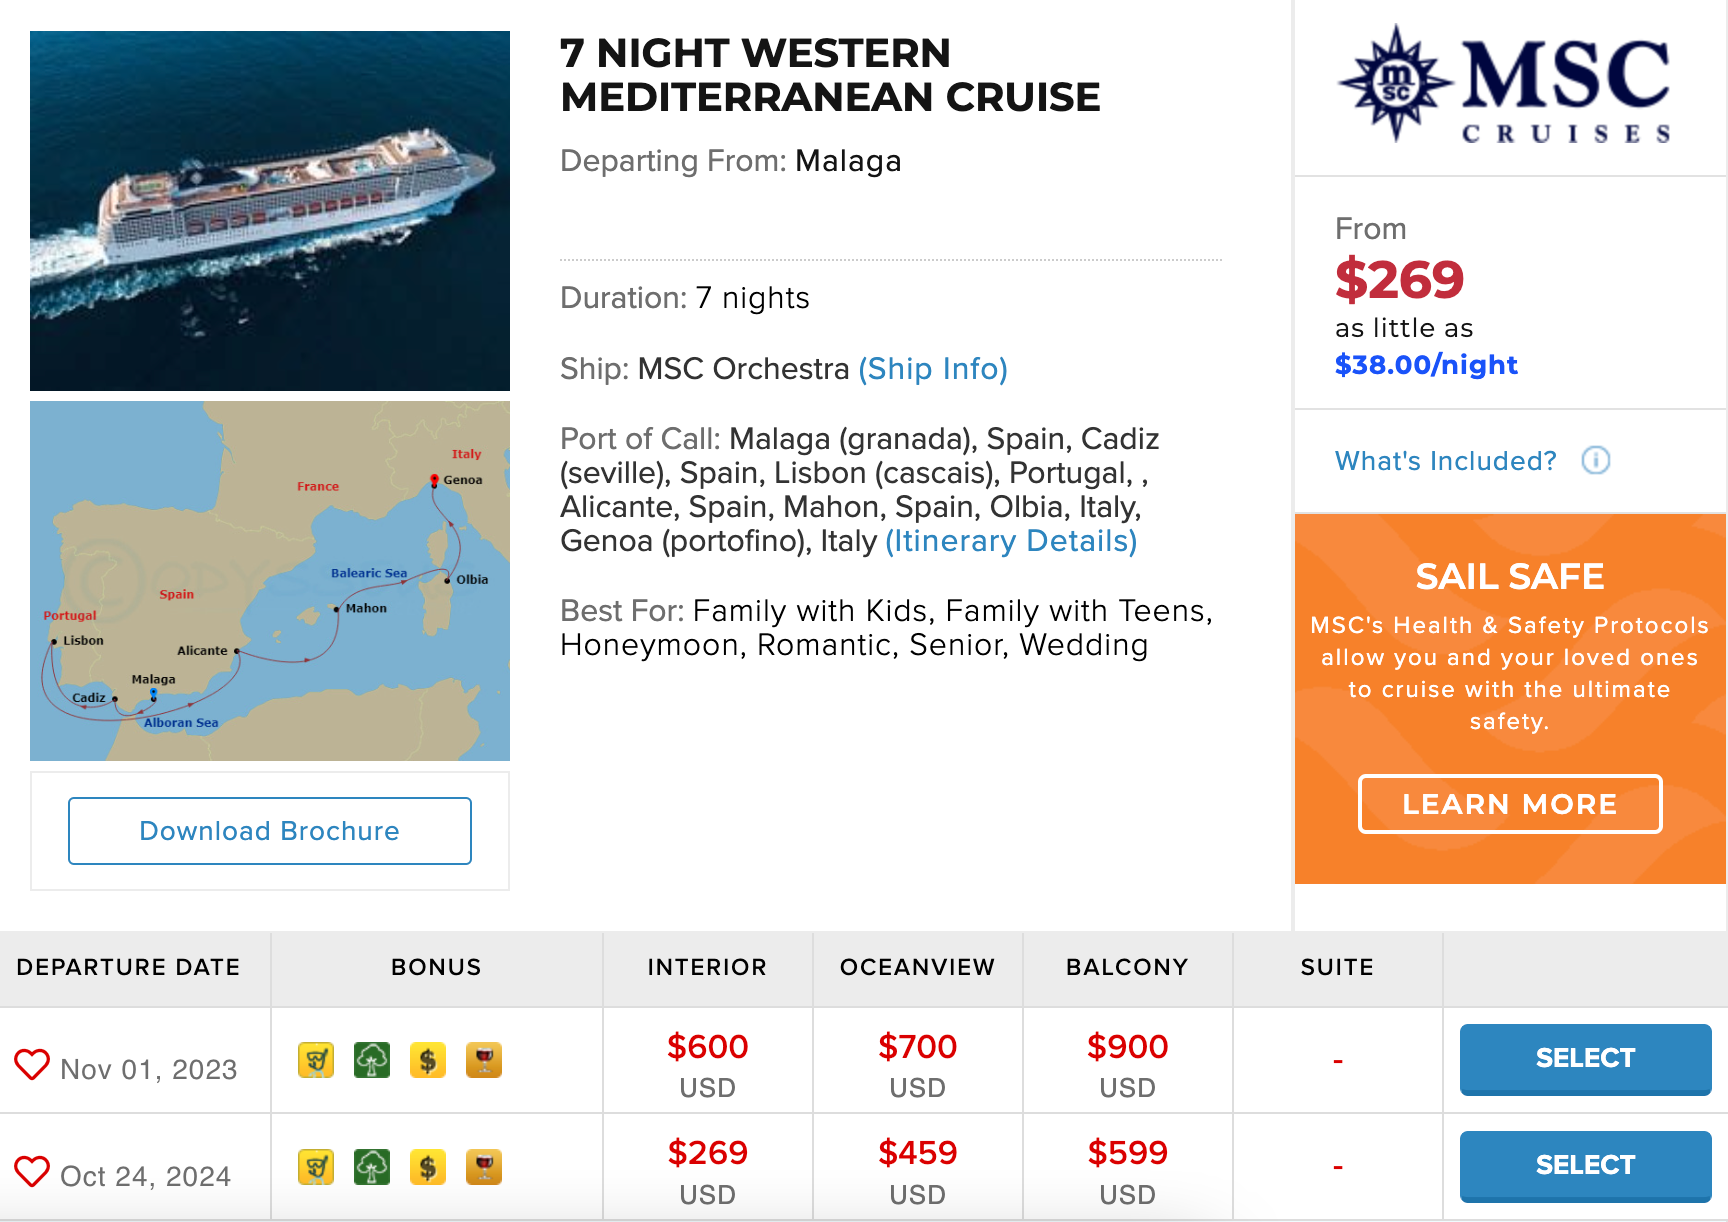 Cruise Deals